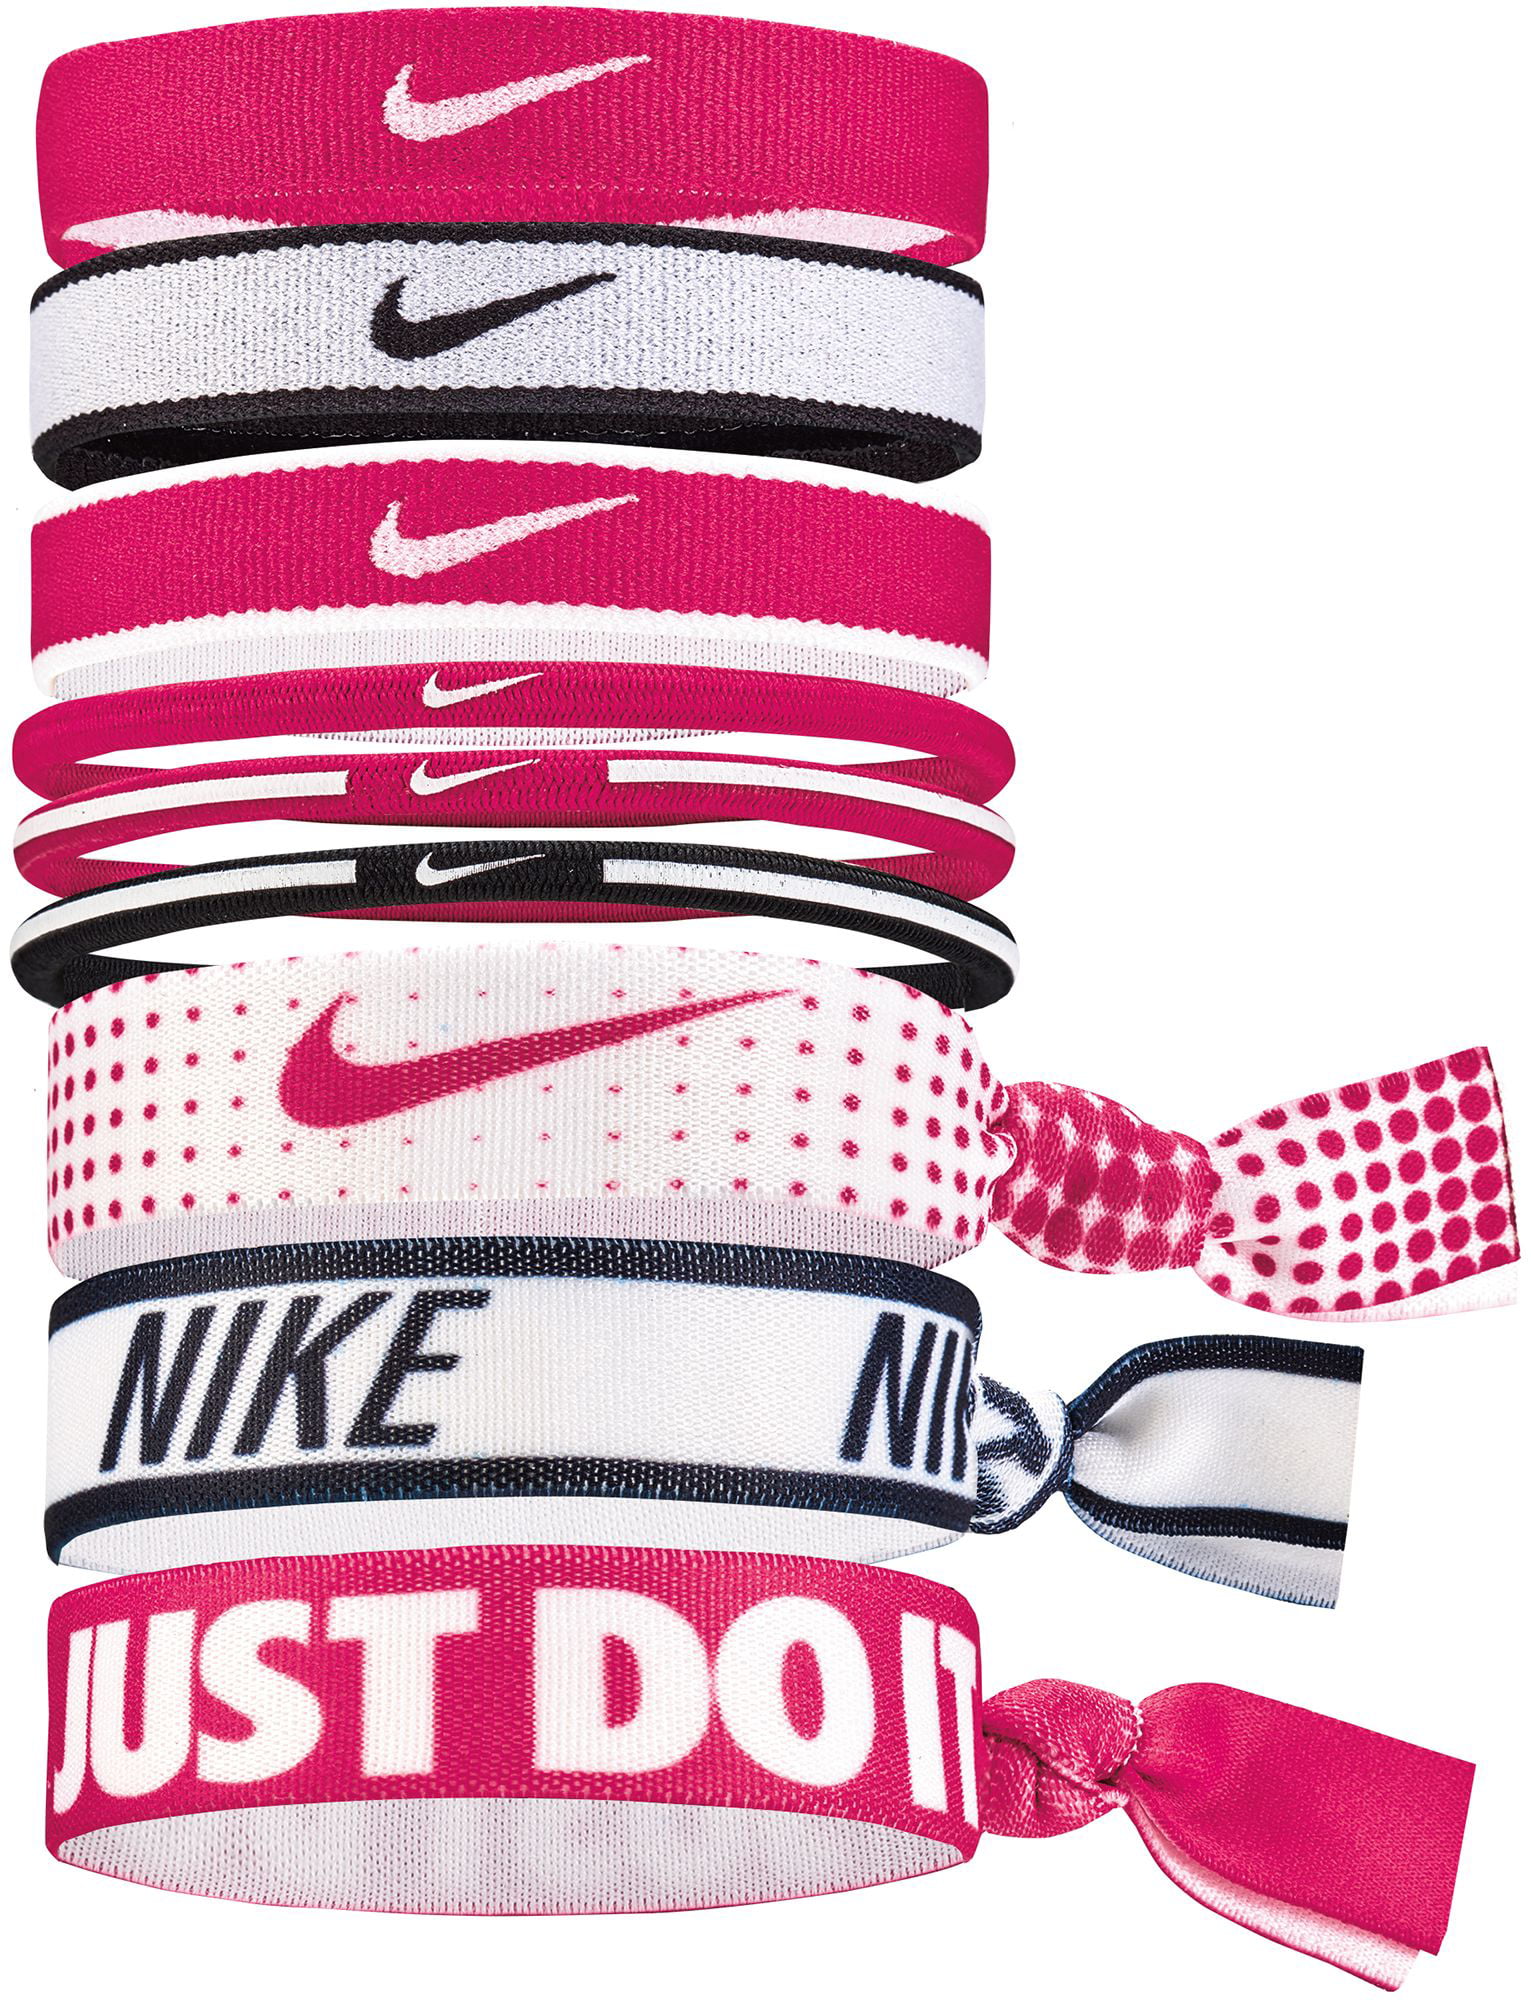 Резинка найк. Nike ponytail Holders. Резинка для волос найк. Набор резинок для волос Nike. Спортивная резинка для волос Nike.